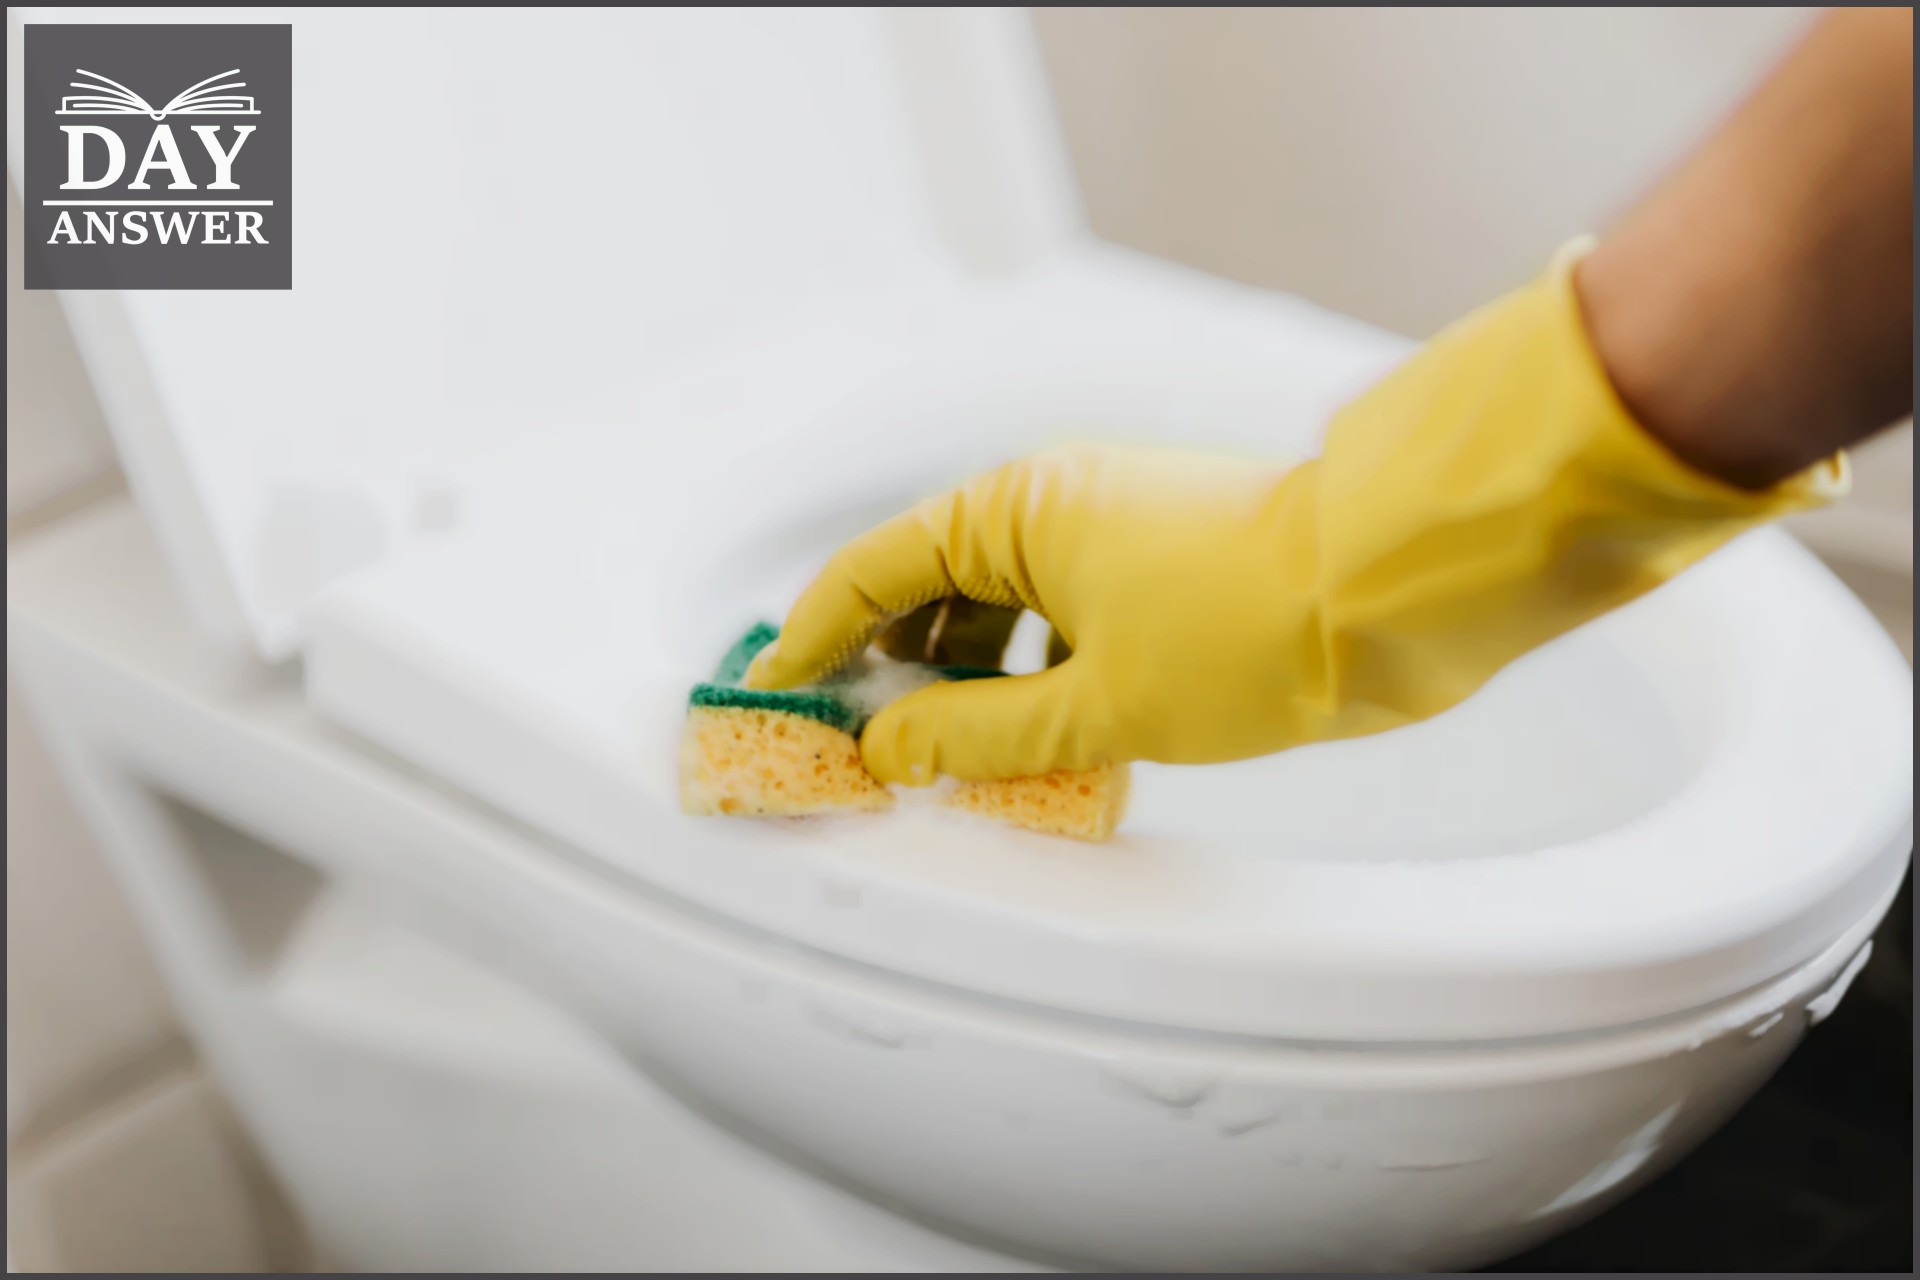 Banheiro de restaurante: Como fazer a limpeza do modo certo?